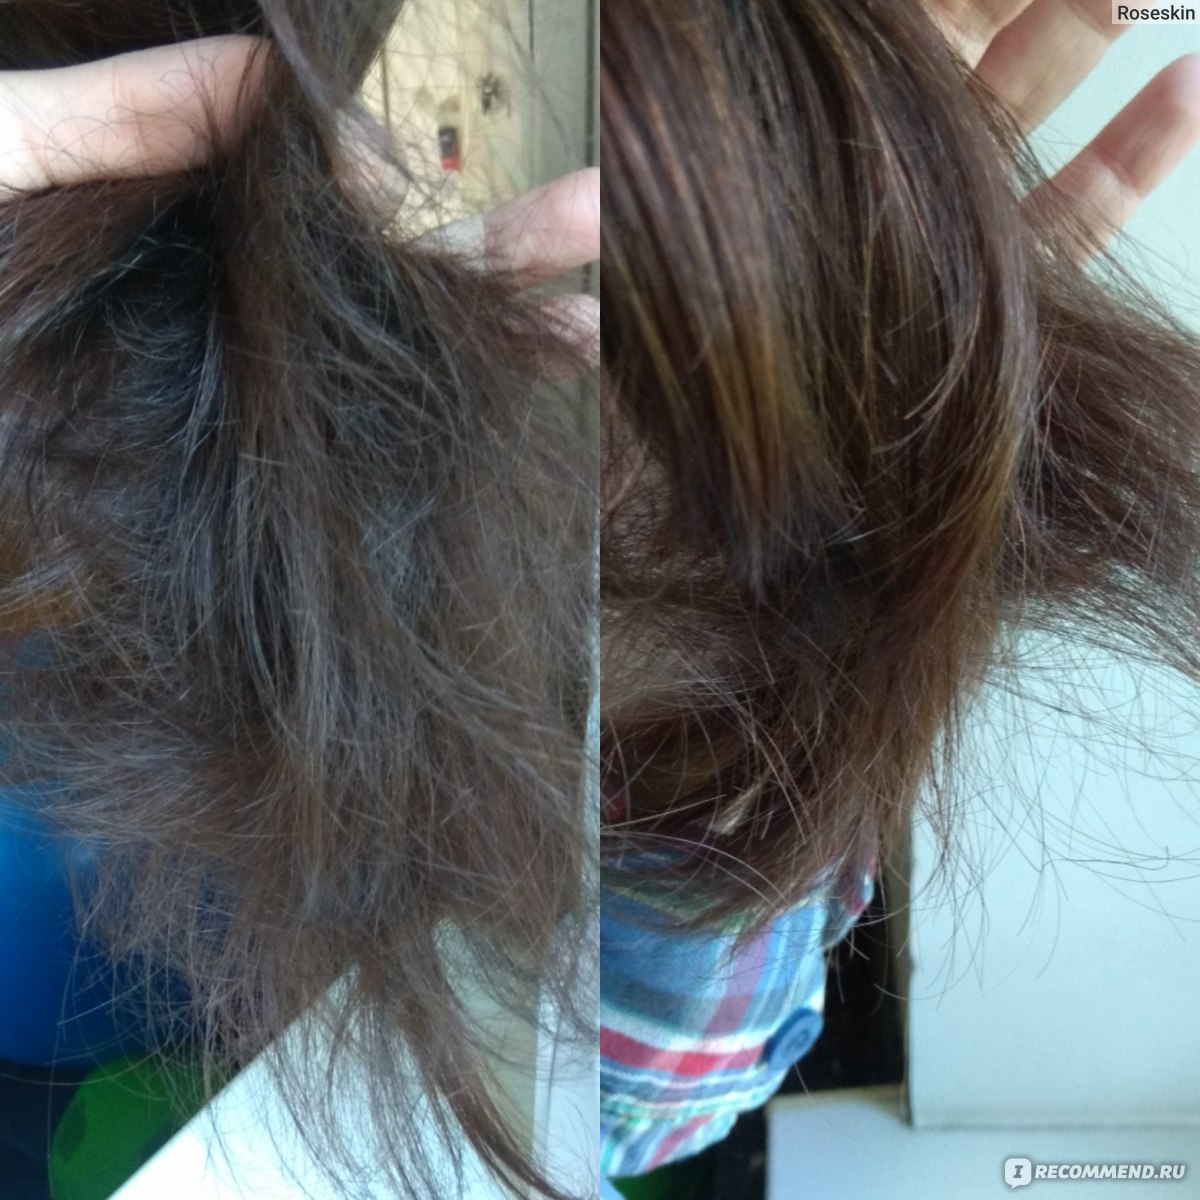 8 seconds salon hair repair ampoule способ. Филлер для волос 8 секунд. Филлер masil для волос до после. Волосы до после ухода. Филлеры 8 секунд для волос способ применения.